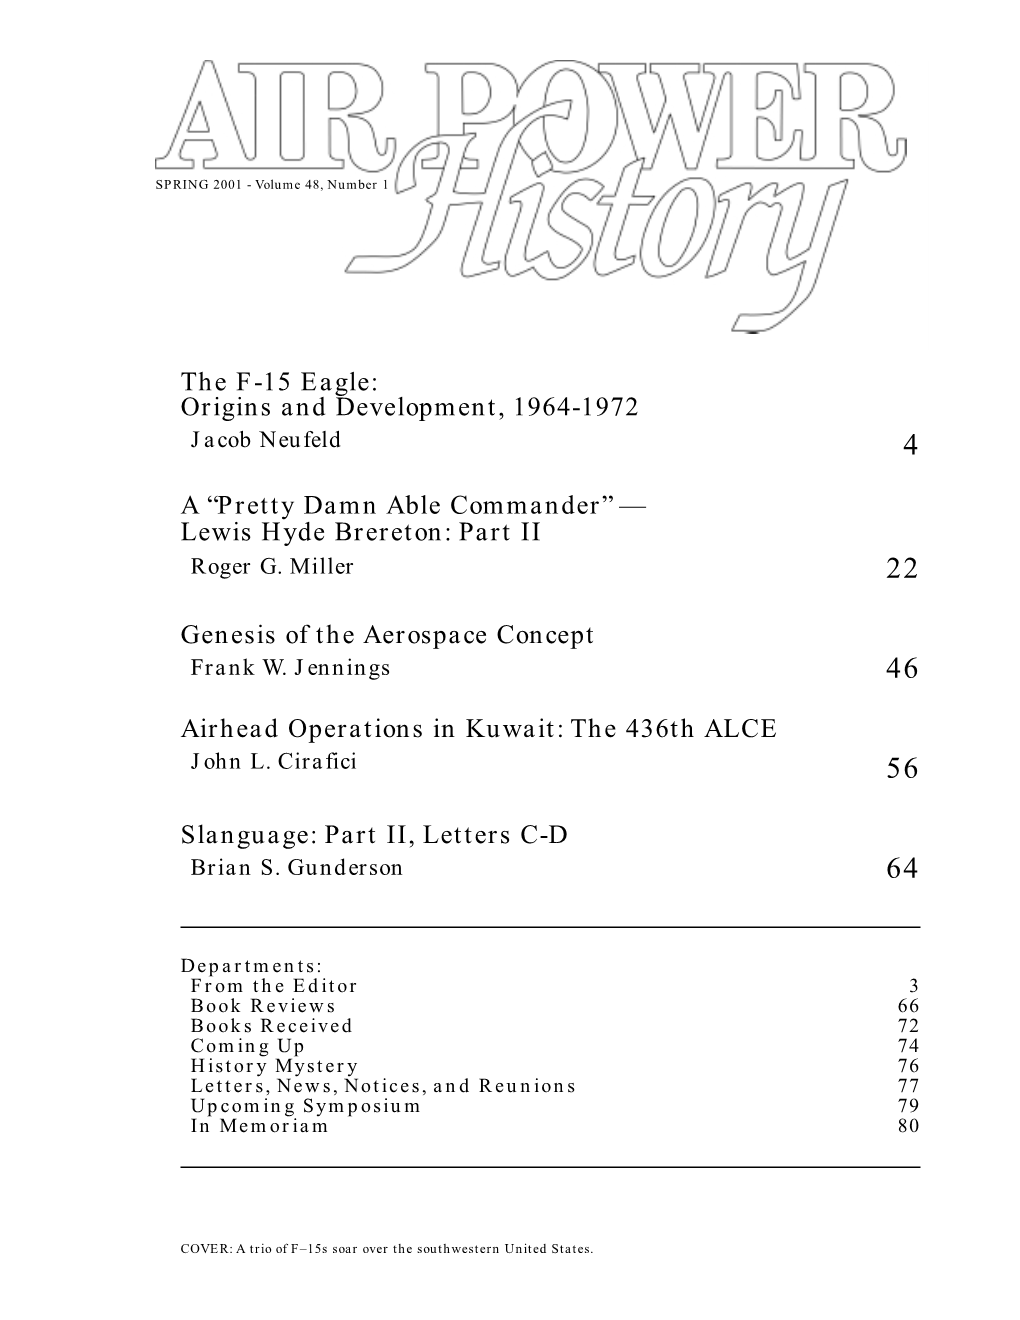 The F-15 Eagle: Origins and Development, 1964-1972 Jacob Neufeld 4